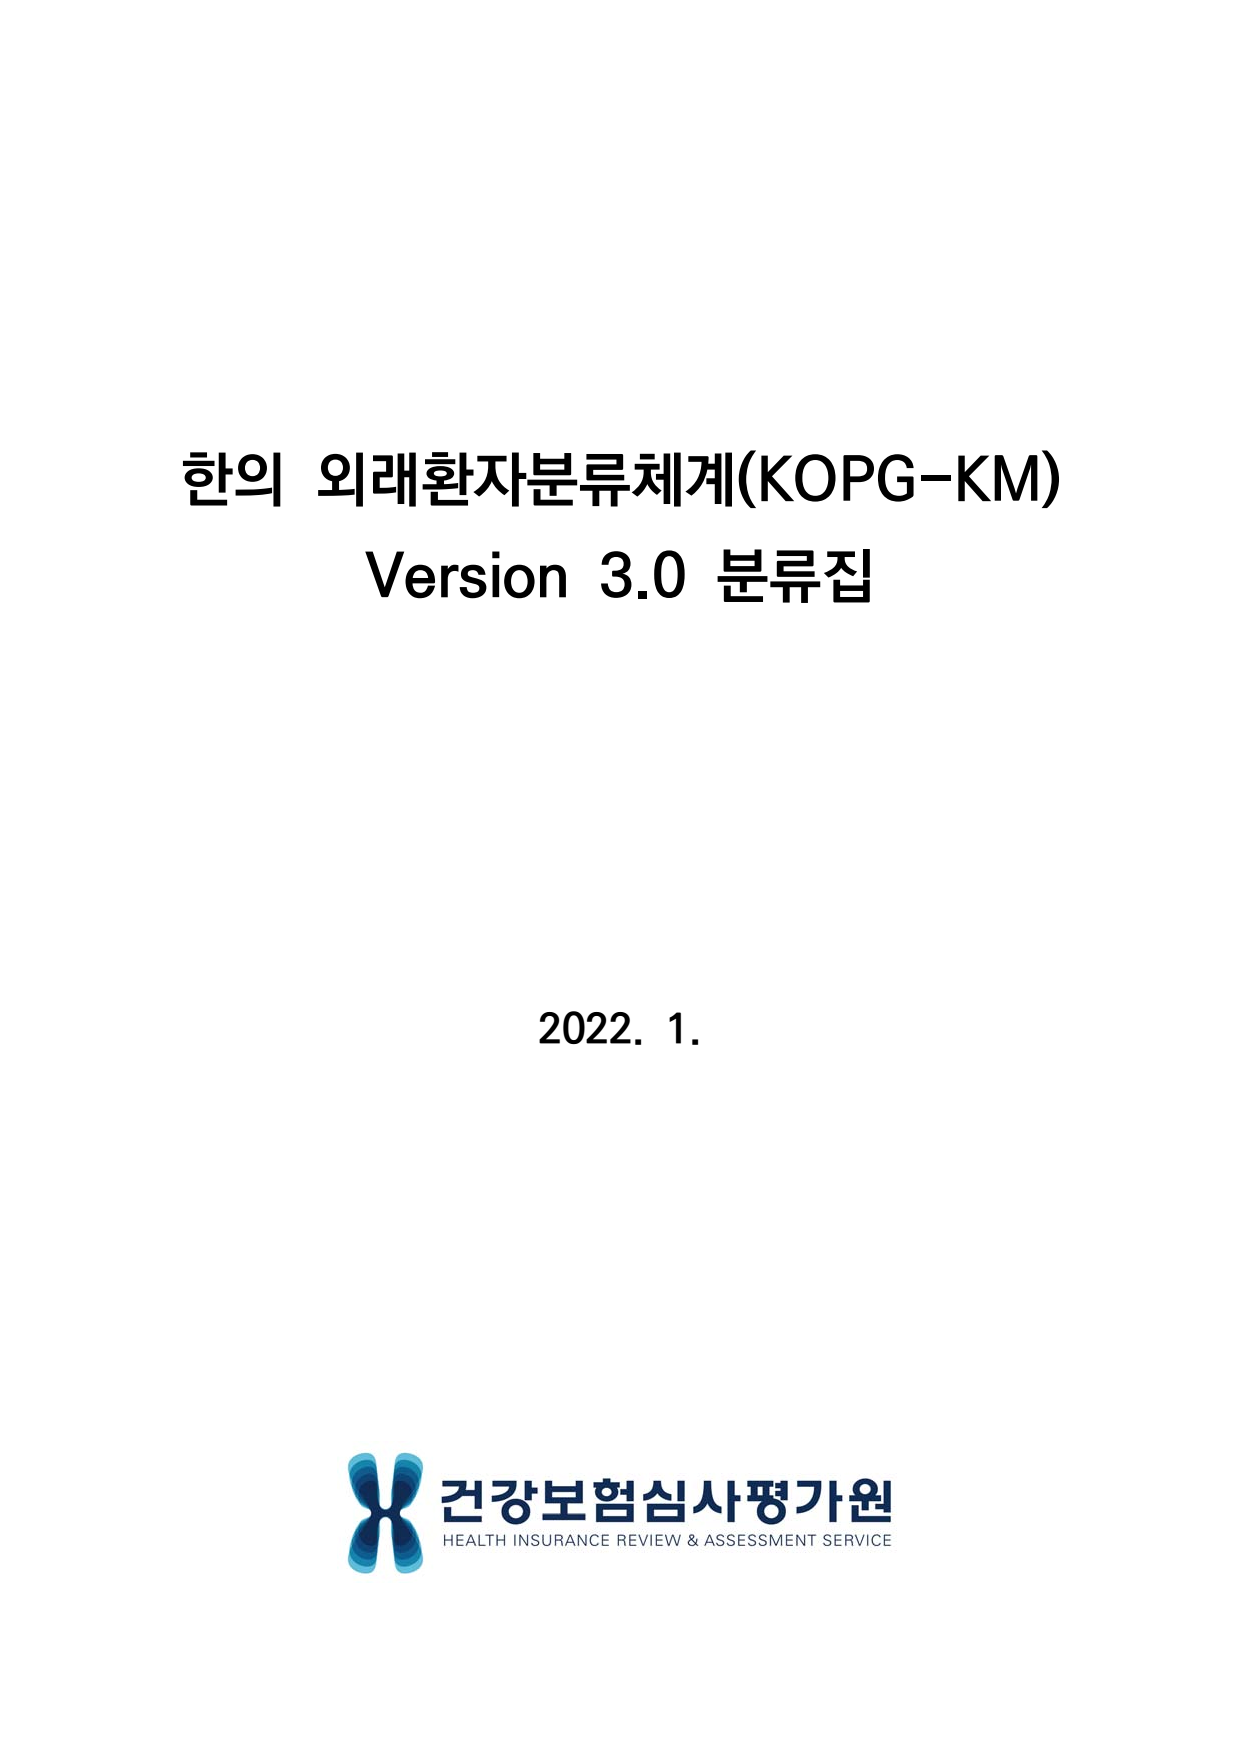 KOPG-KM 버전3.0 분류집